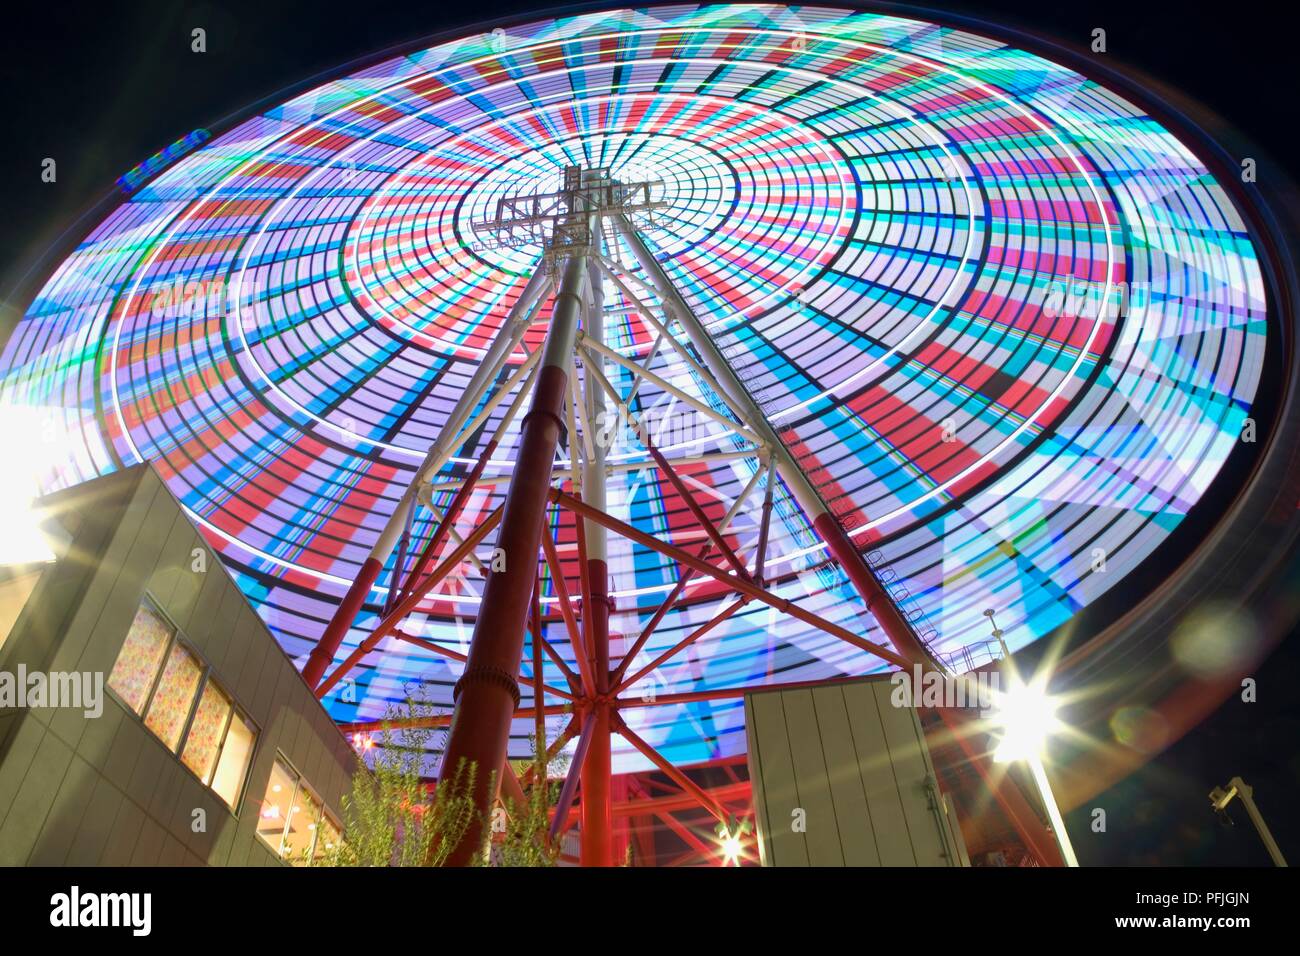 Japan, Tokyo, Odaiba, Big Wheel illuminated at night, low angle view Stock Photo